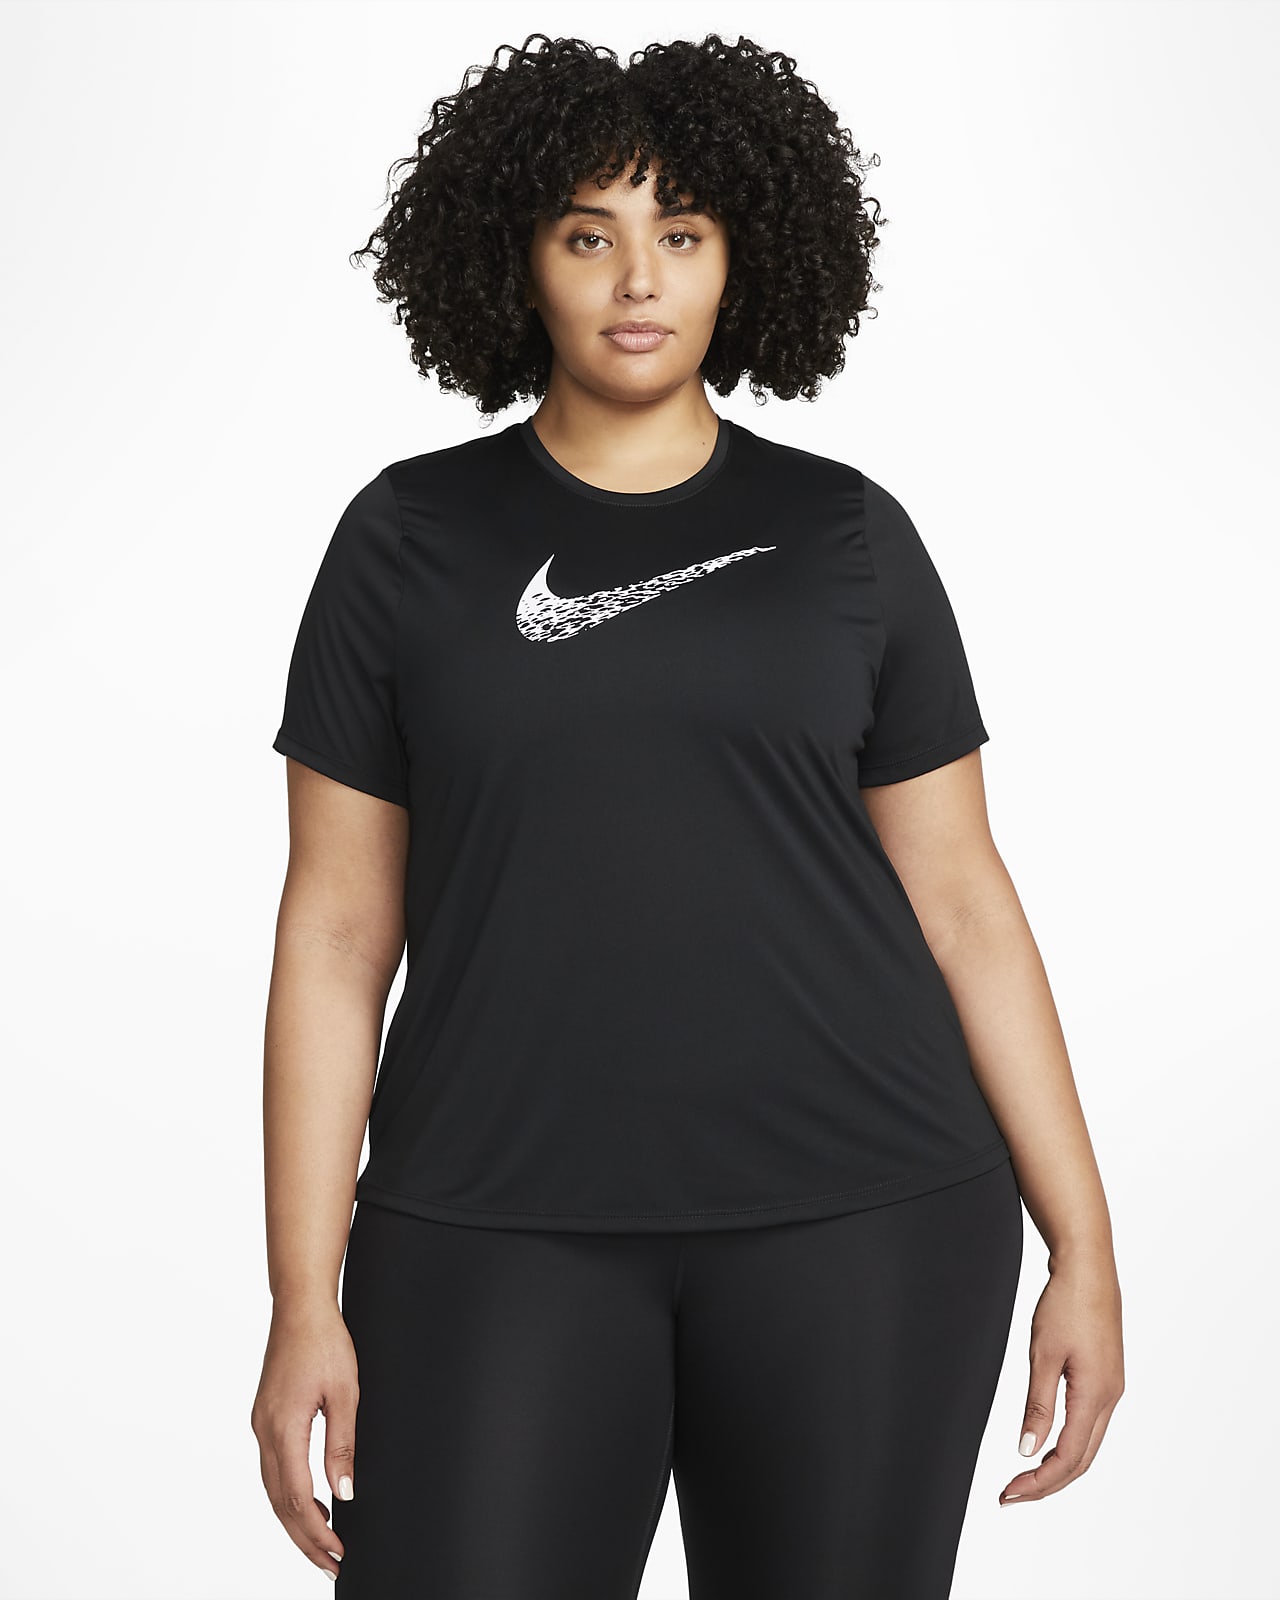 Nike Swoosh Run Women's Short-Sleeve Running Top